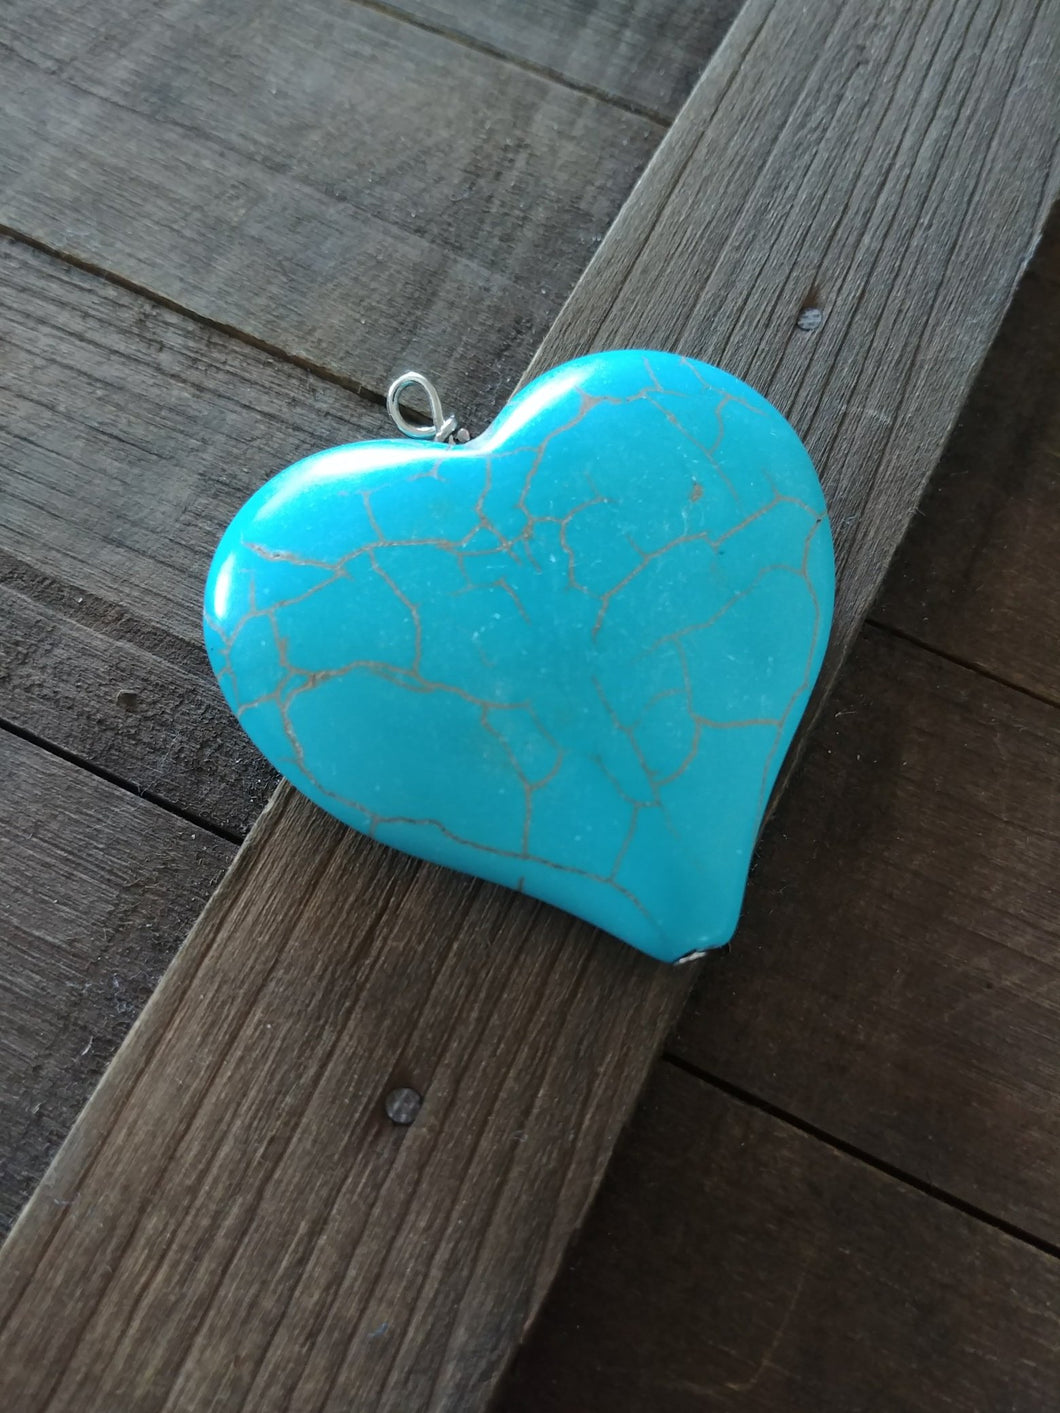 Large Heart Pendant Howlite Pendant Faux Turquoise Pendant Blue Turquoise Heart Charm Focal Pendant 43mm PREORDER